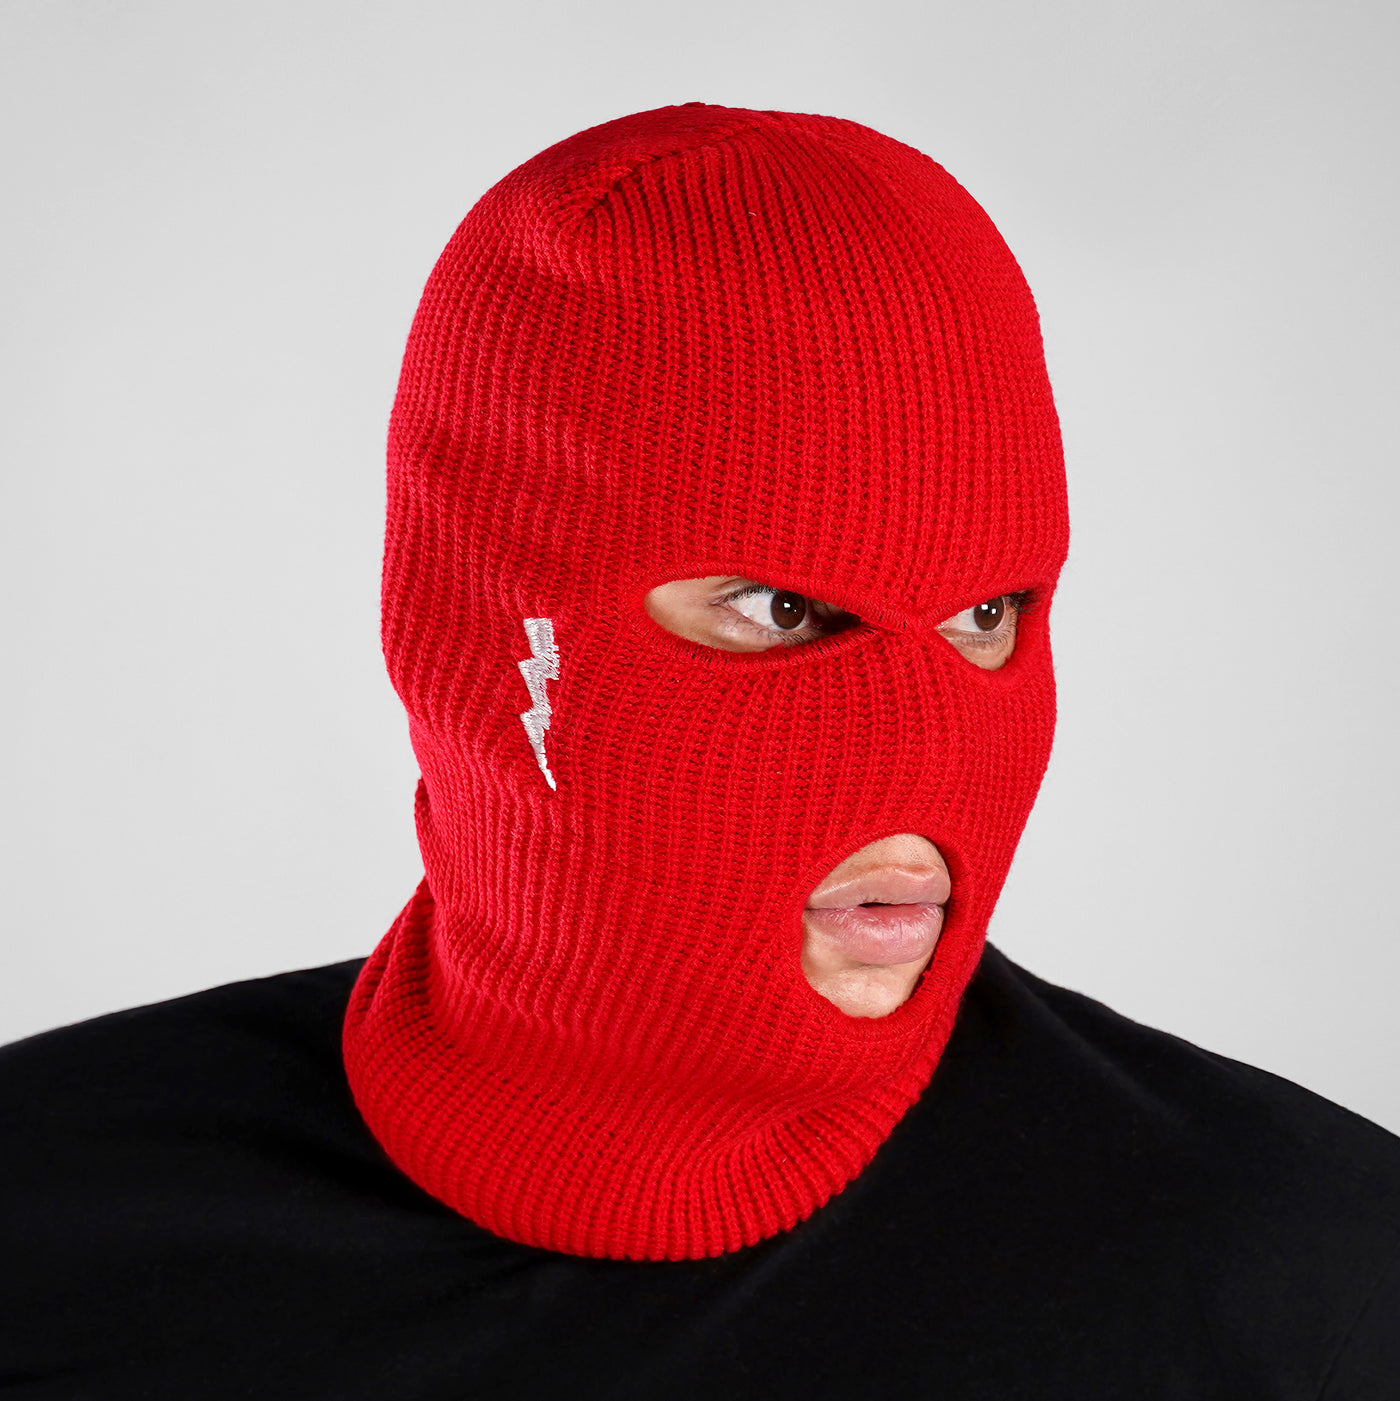 Trueno Red Ski Mask